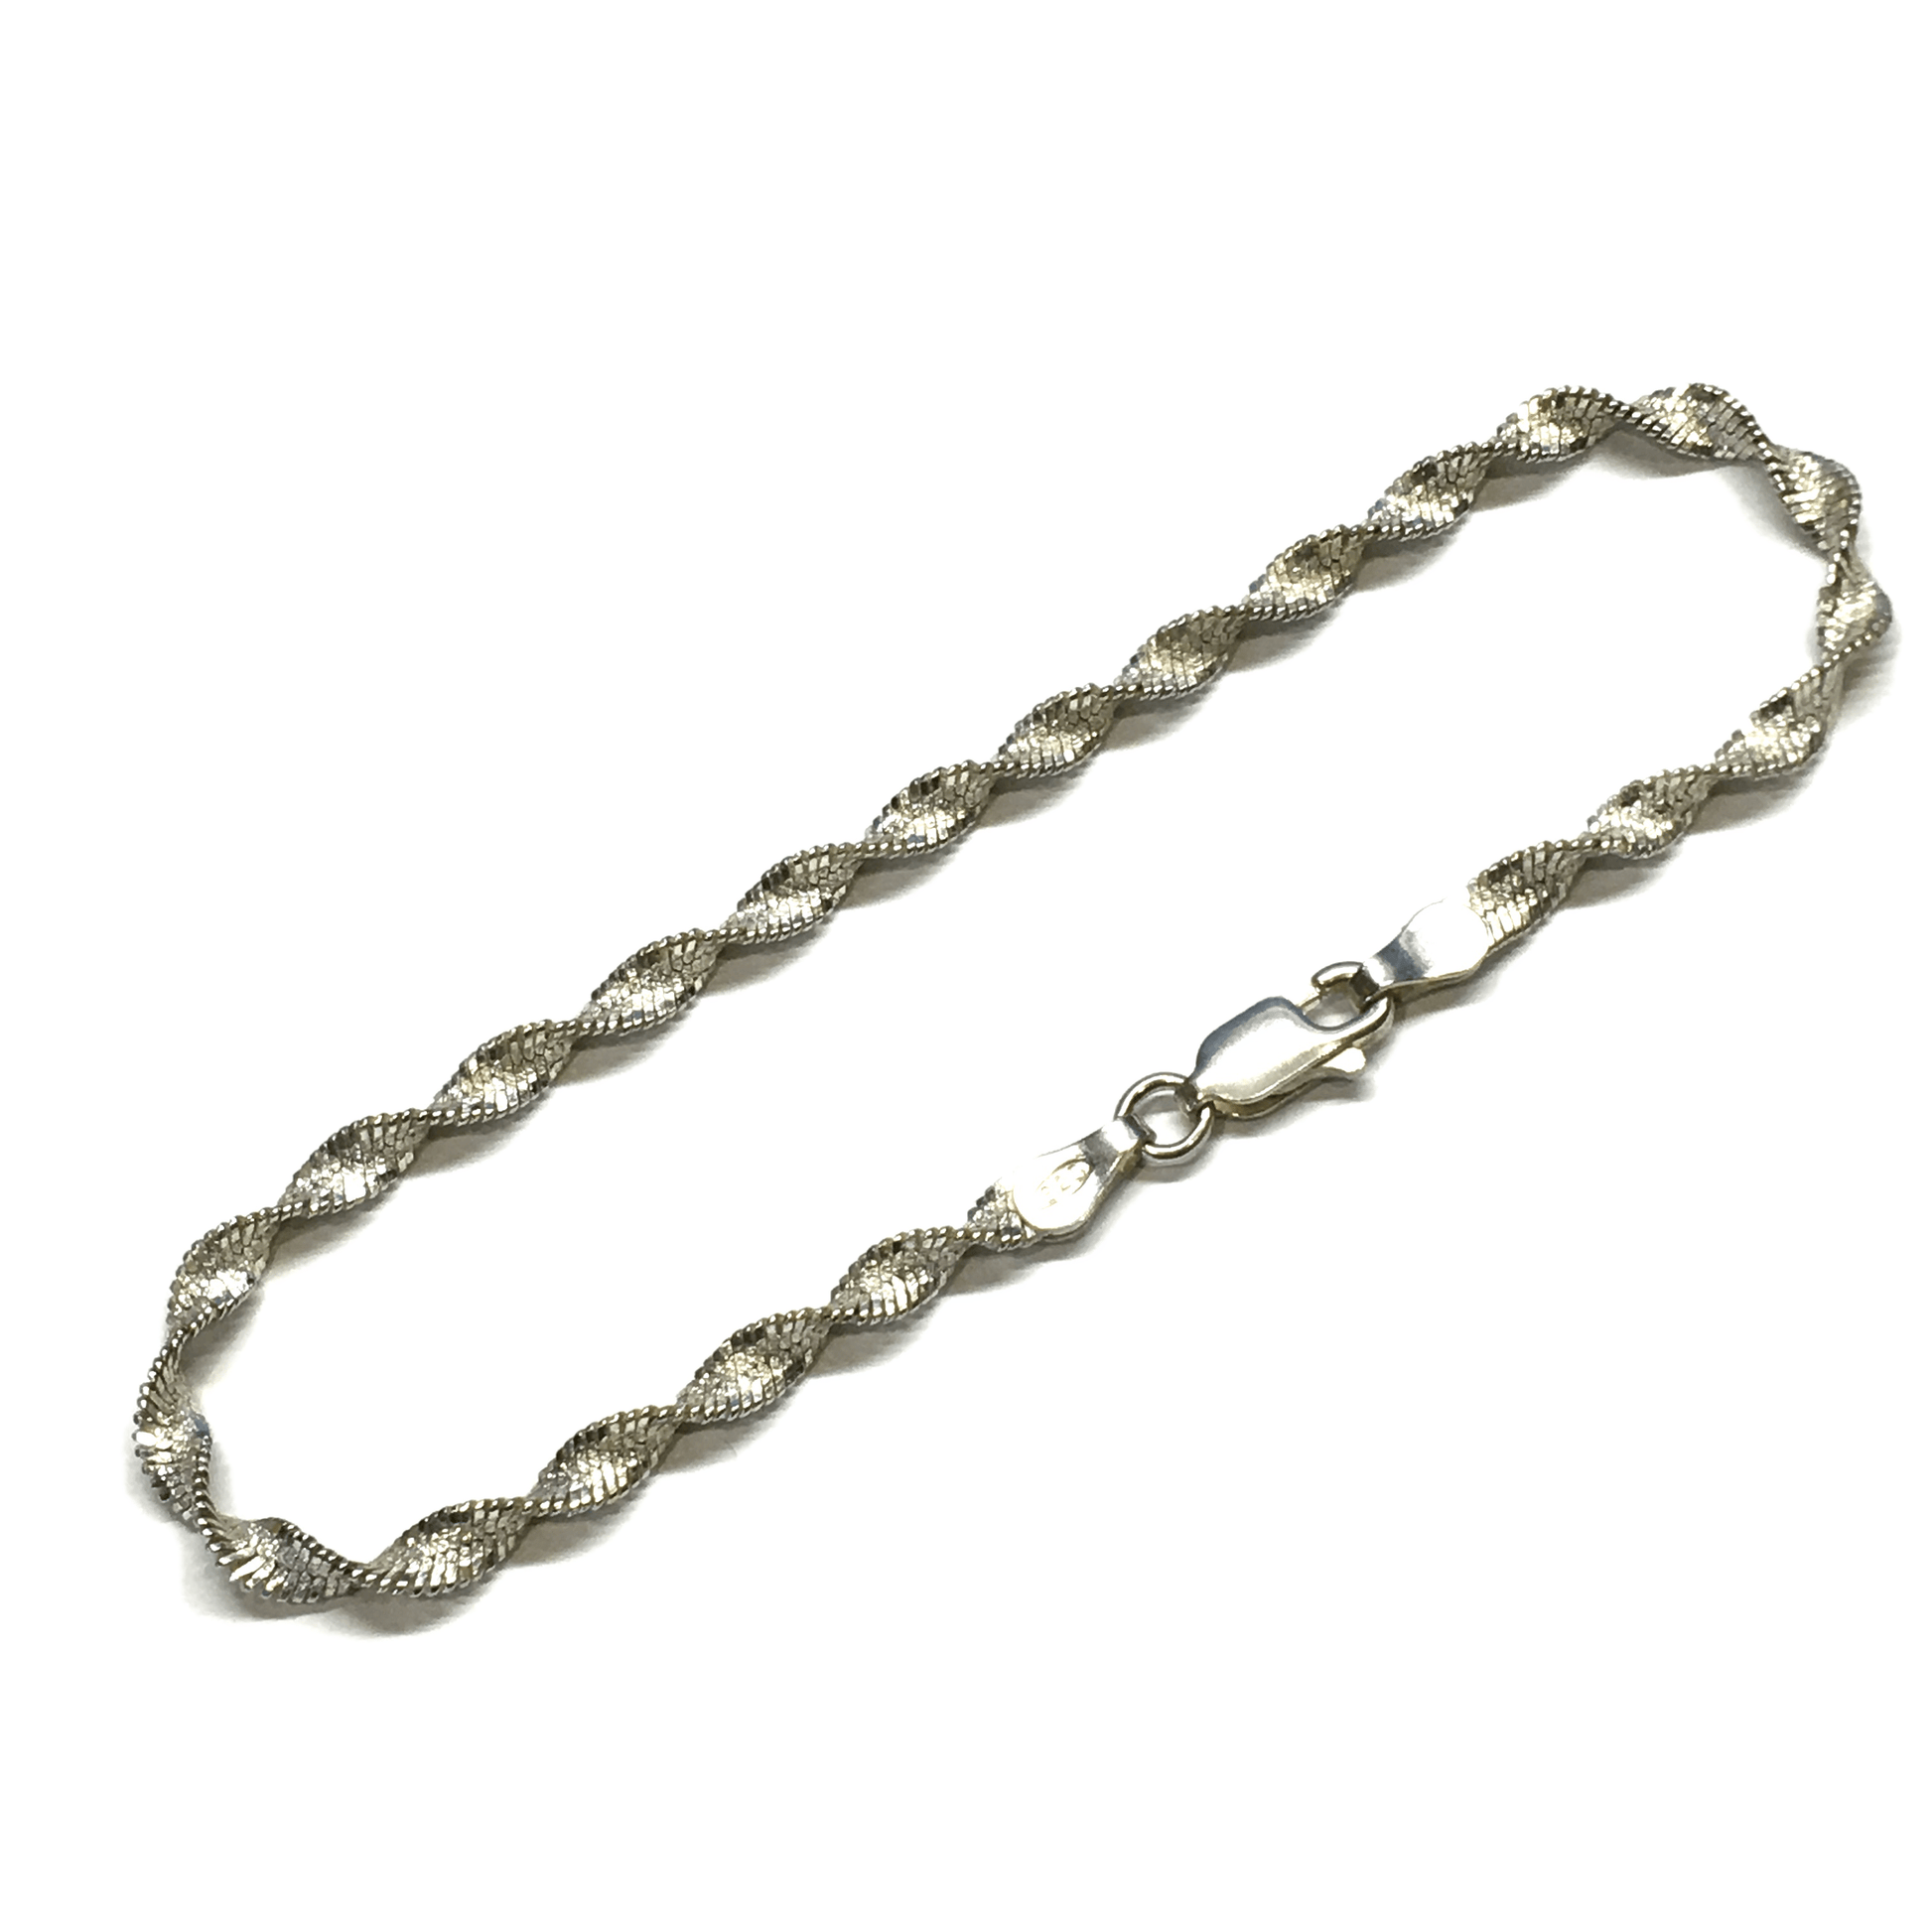 Bracelet - 925 Sterling Silver Sandblasted Spiral Rope Design Herringbone Bracelet - Discount Estate Jewelry